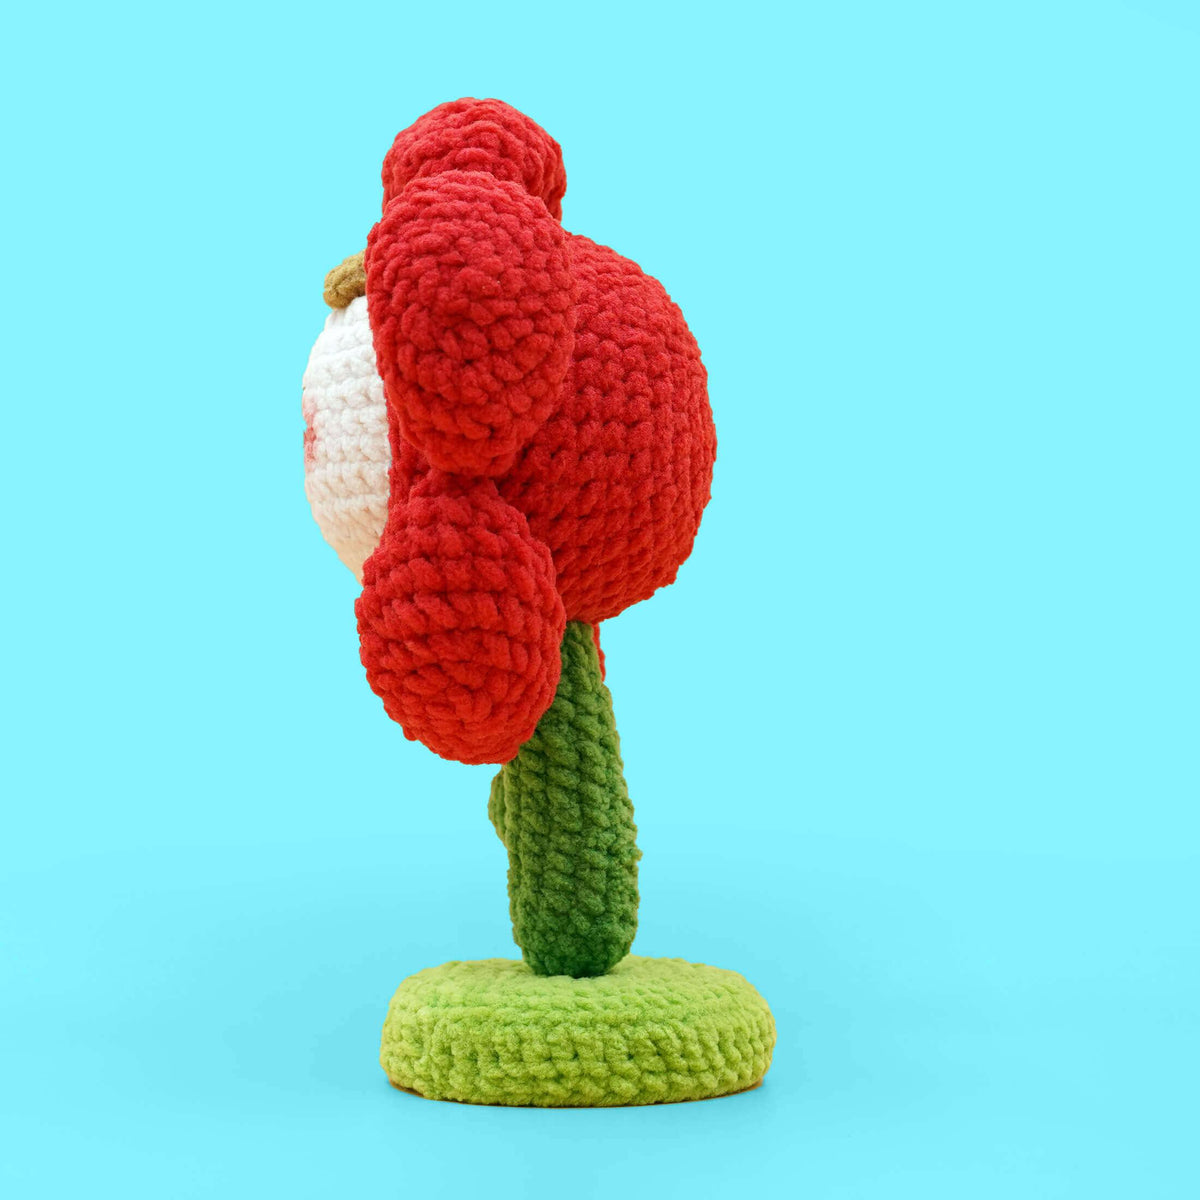 Red Flower Amigurumi Crochet Kit - HiCrochet